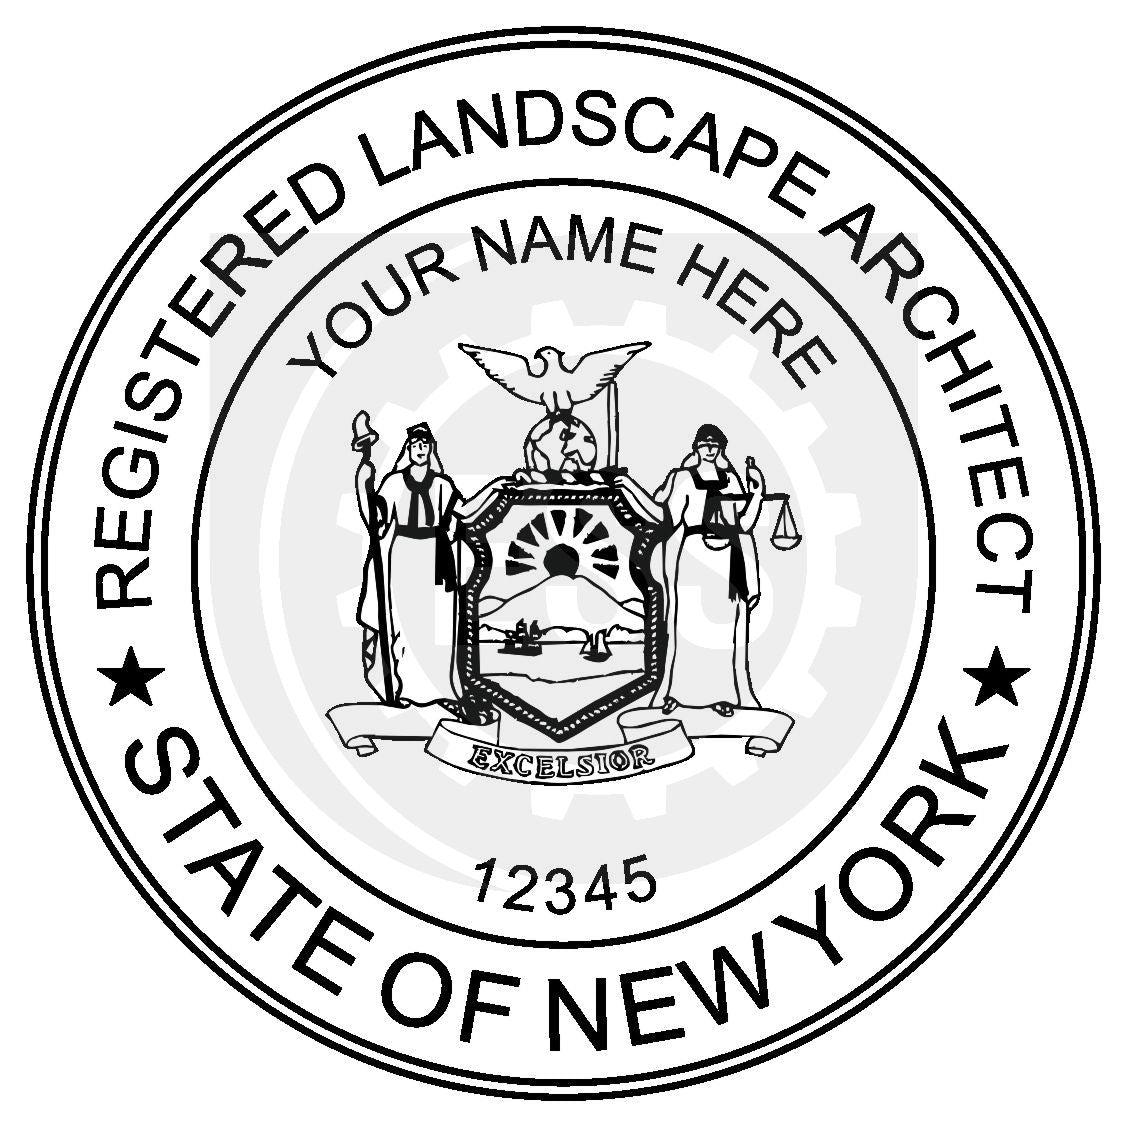 New York Landscape Architect Seal Setup